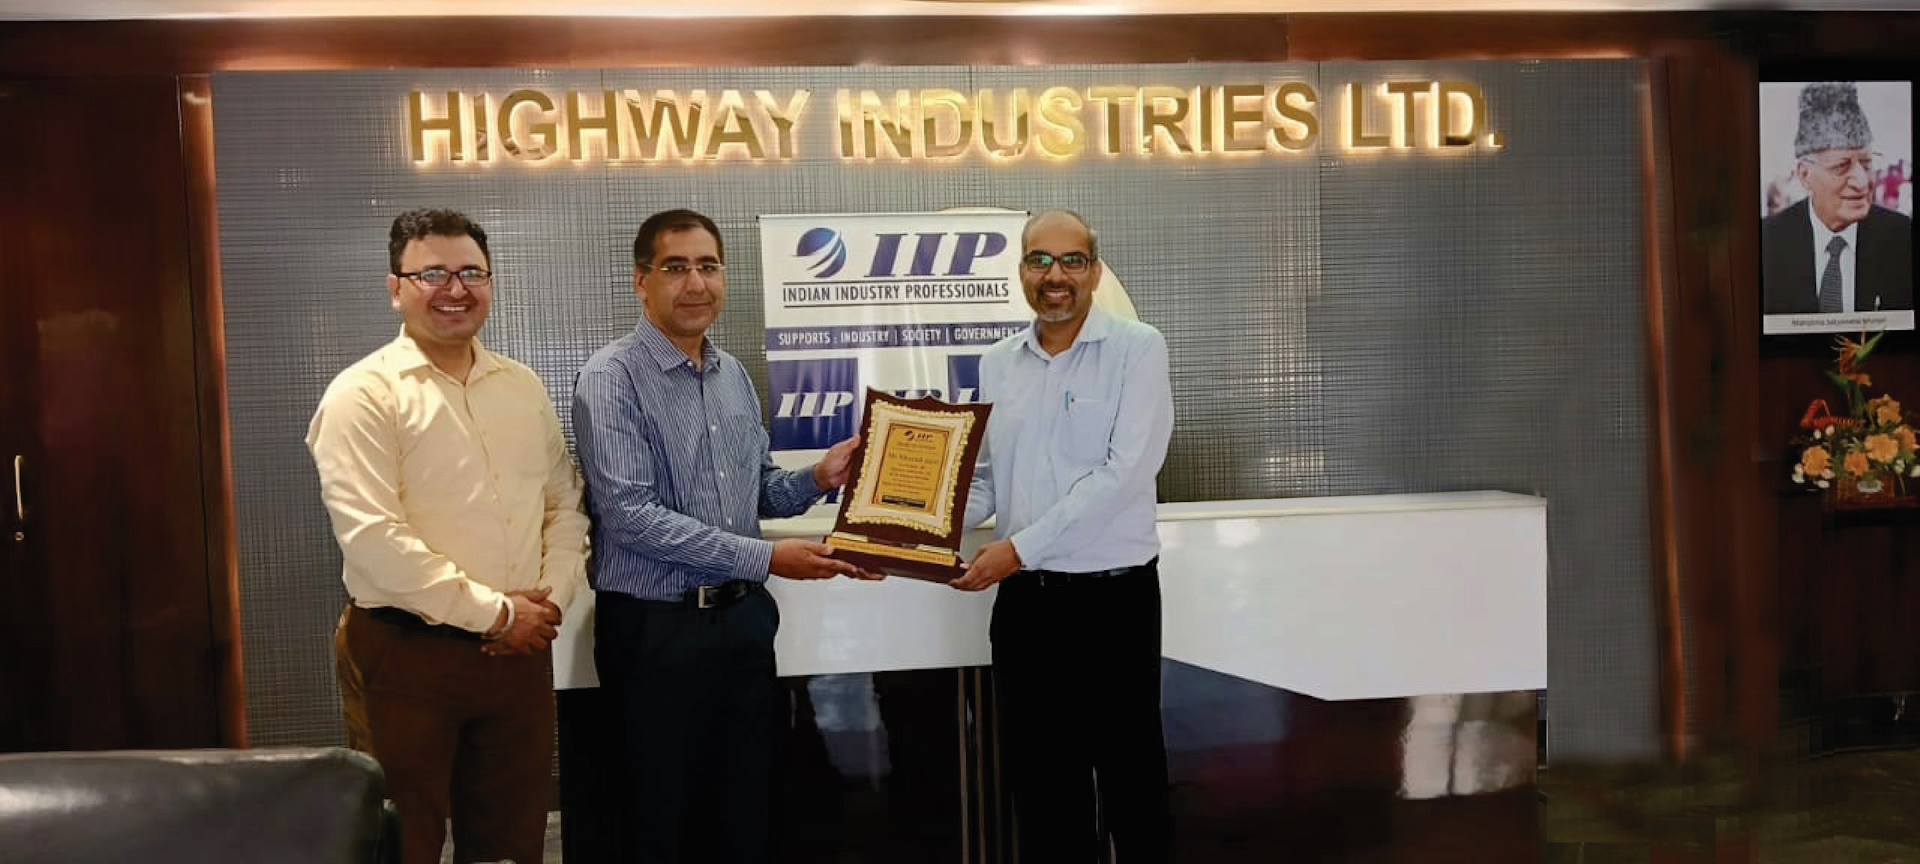 Highway Industries Ltd